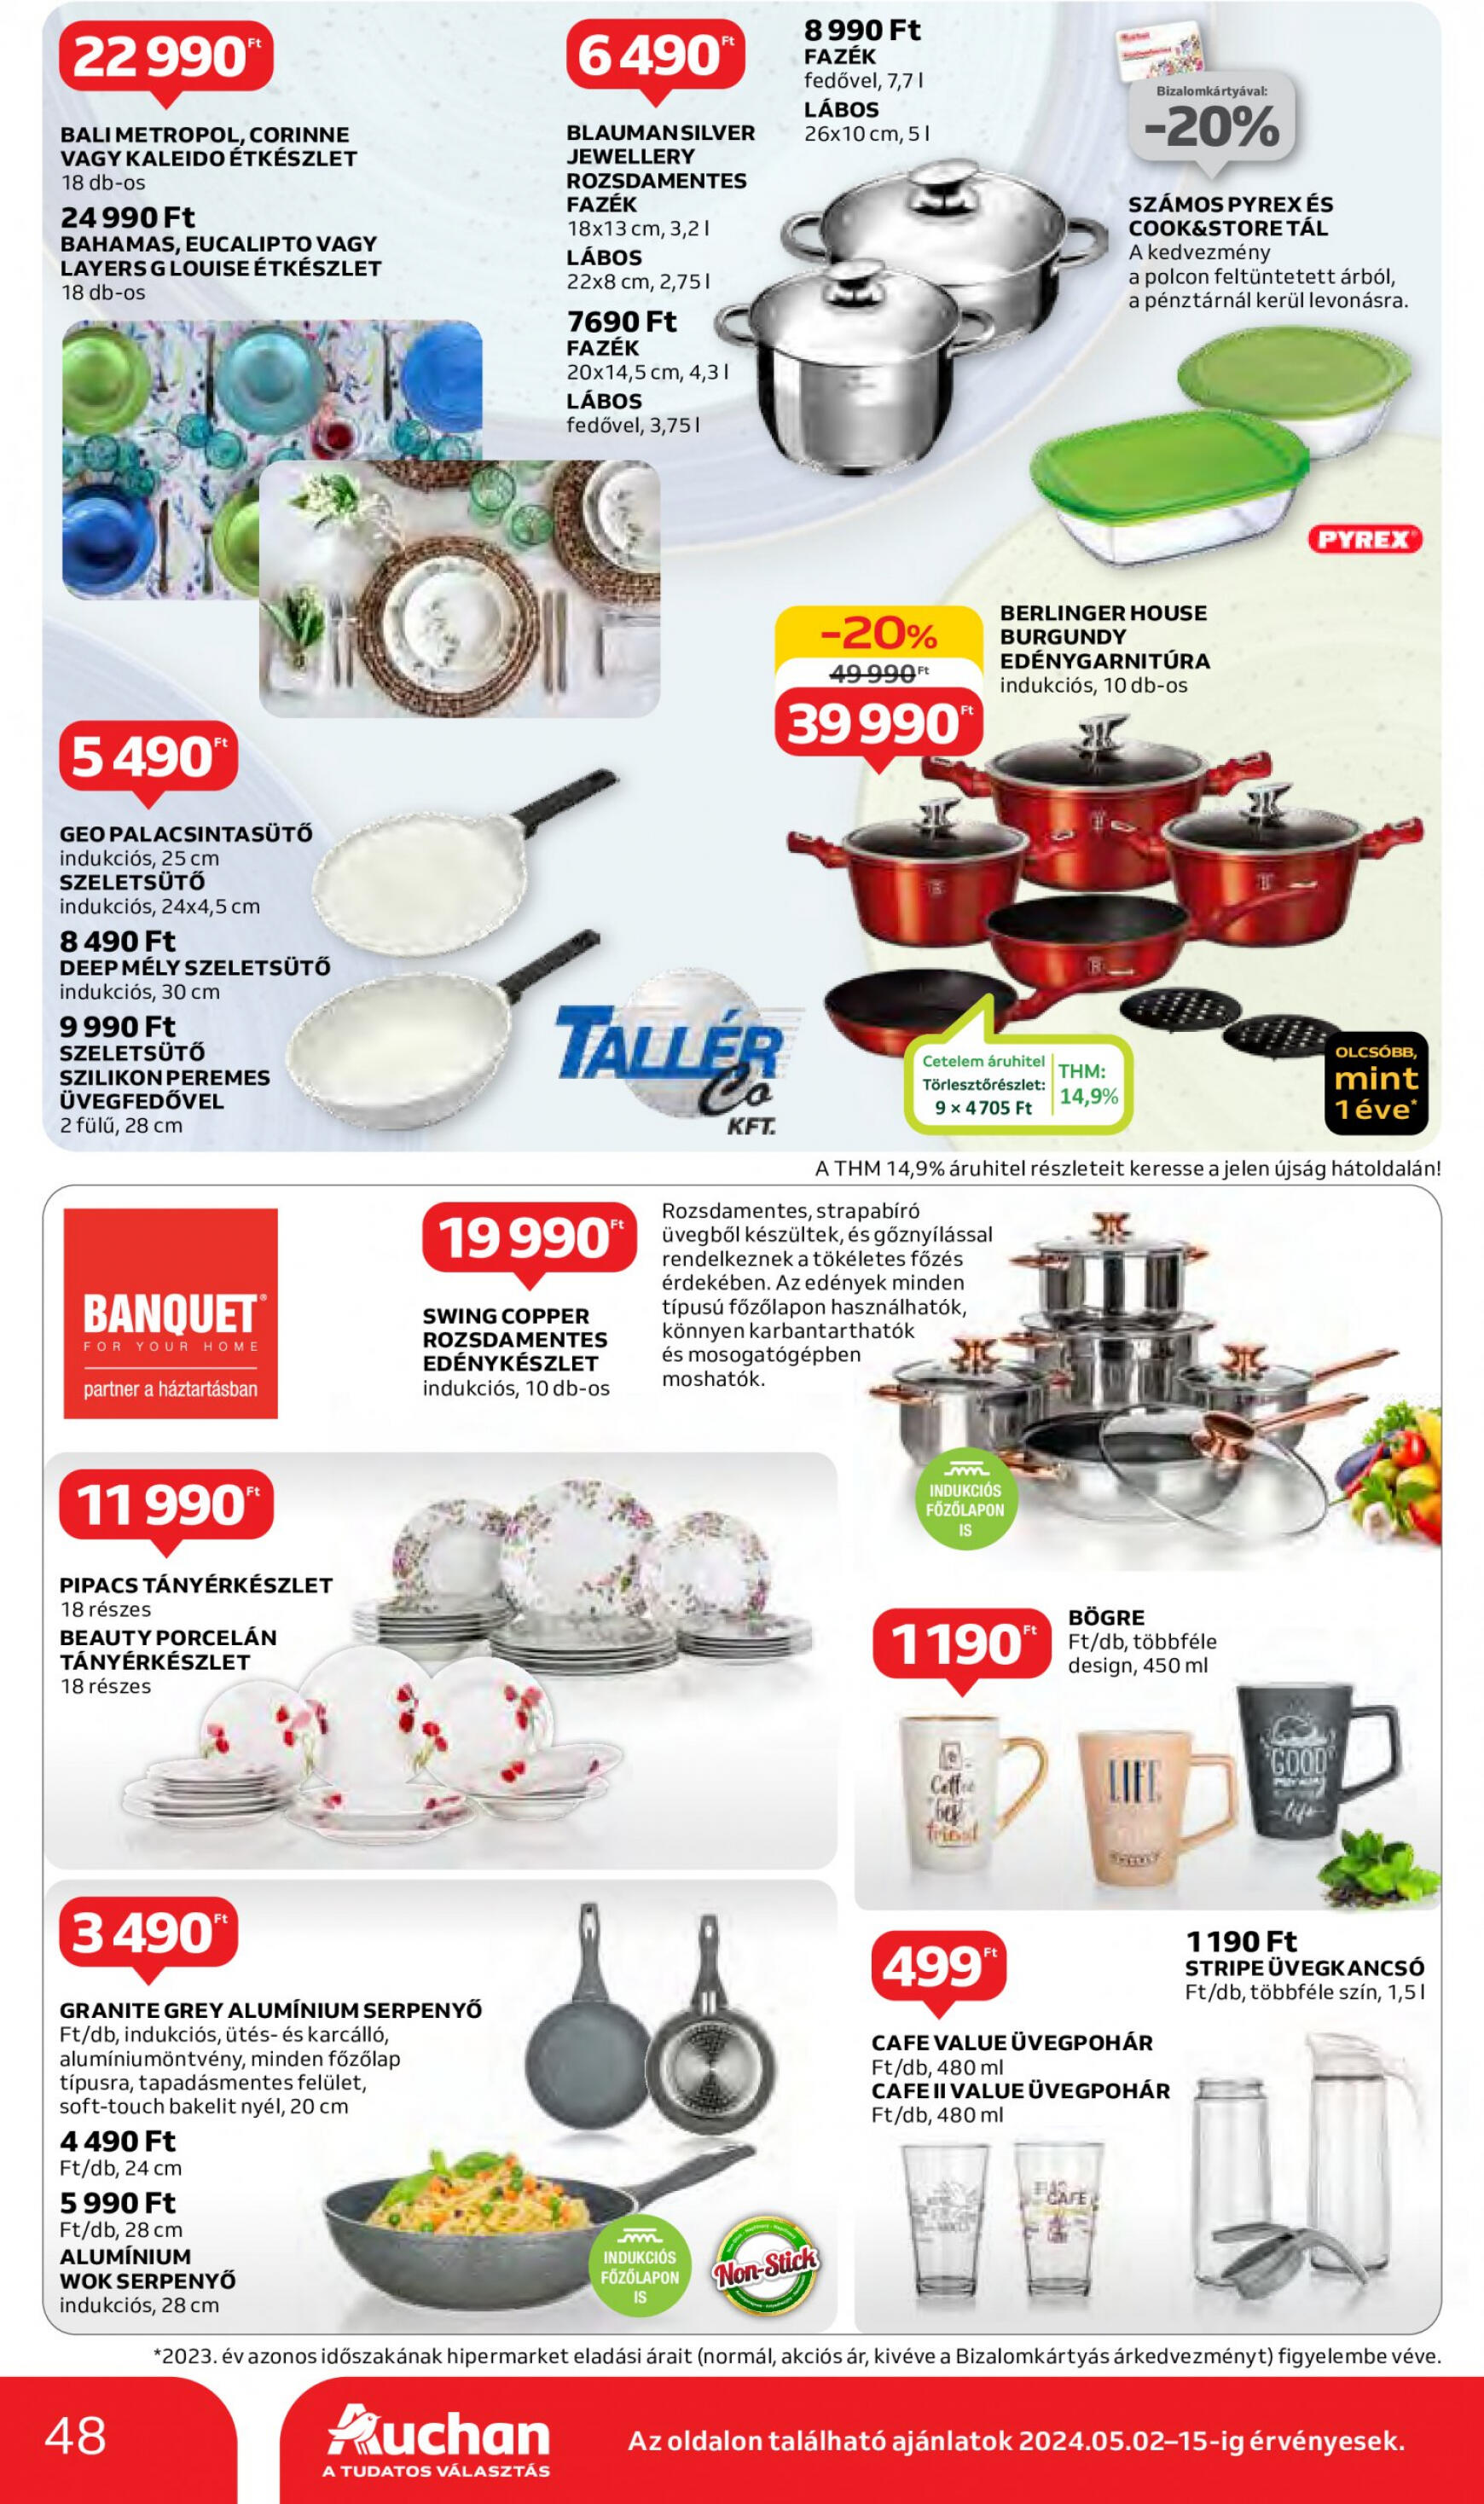 auchan - Aktuális újság Auchan 05.02. - 05.08. - page: 48